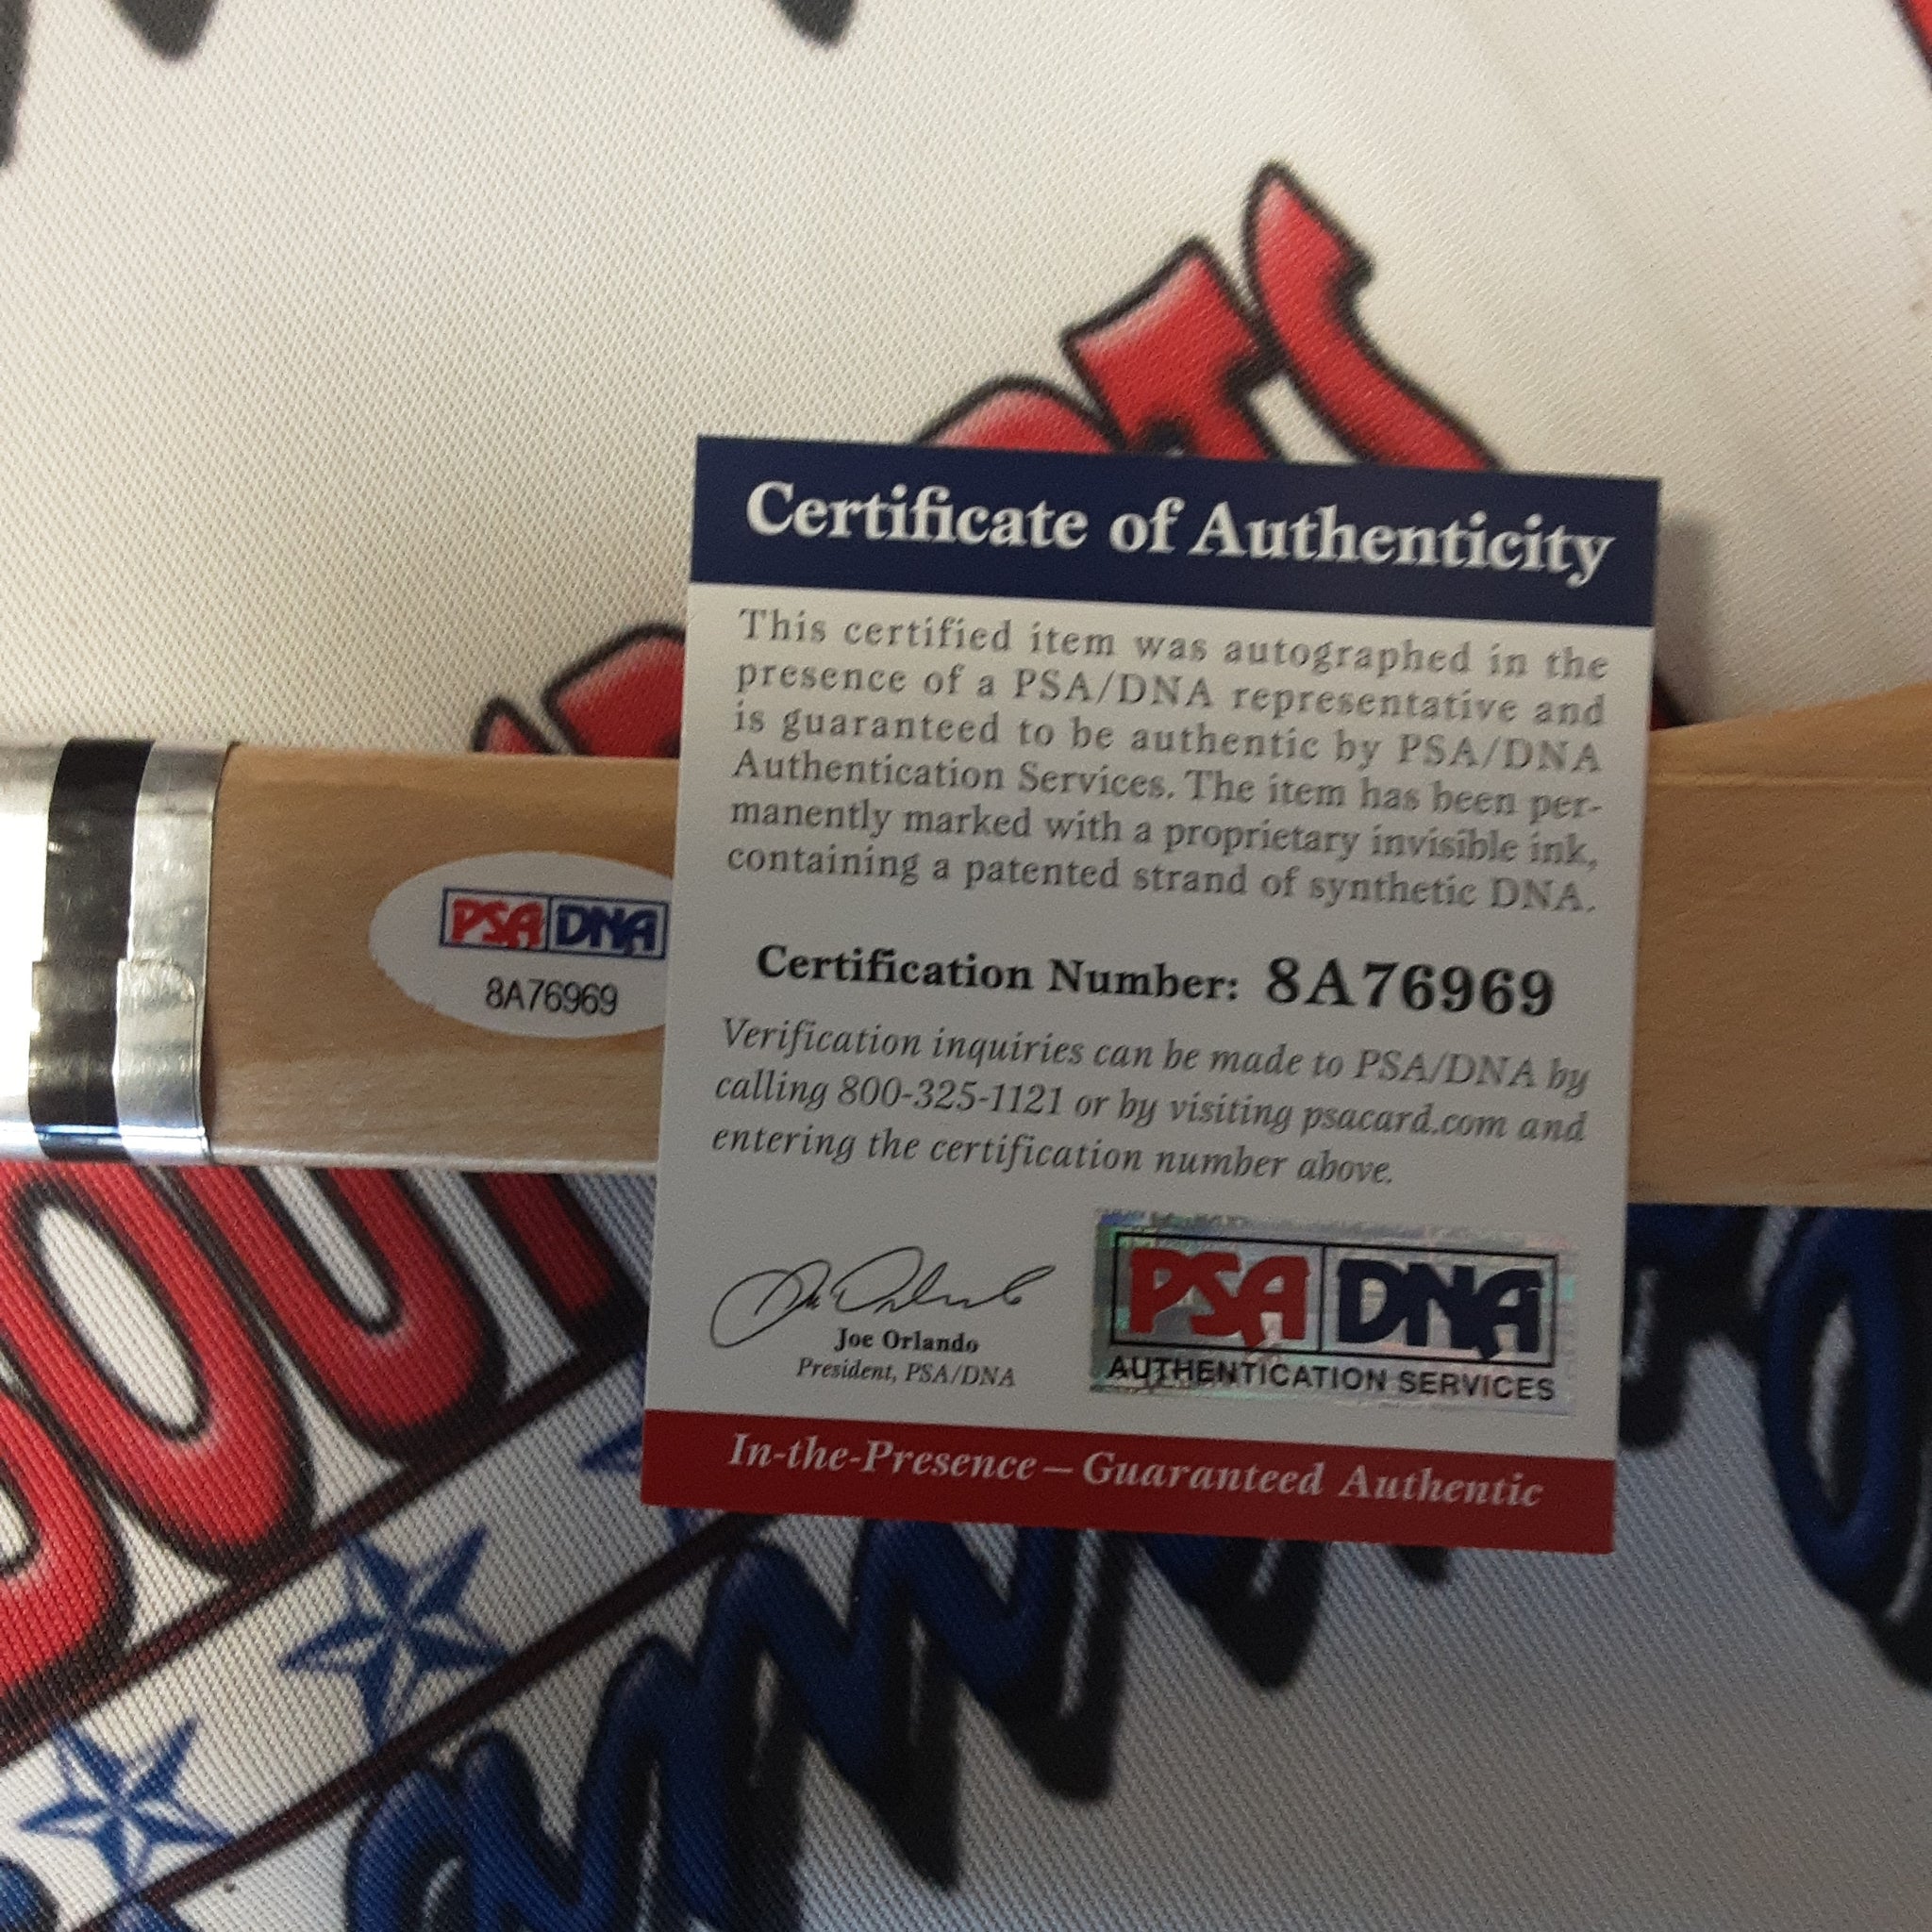 Yanni Gourde Authentic Signed Hockey Stick Autographed PSA